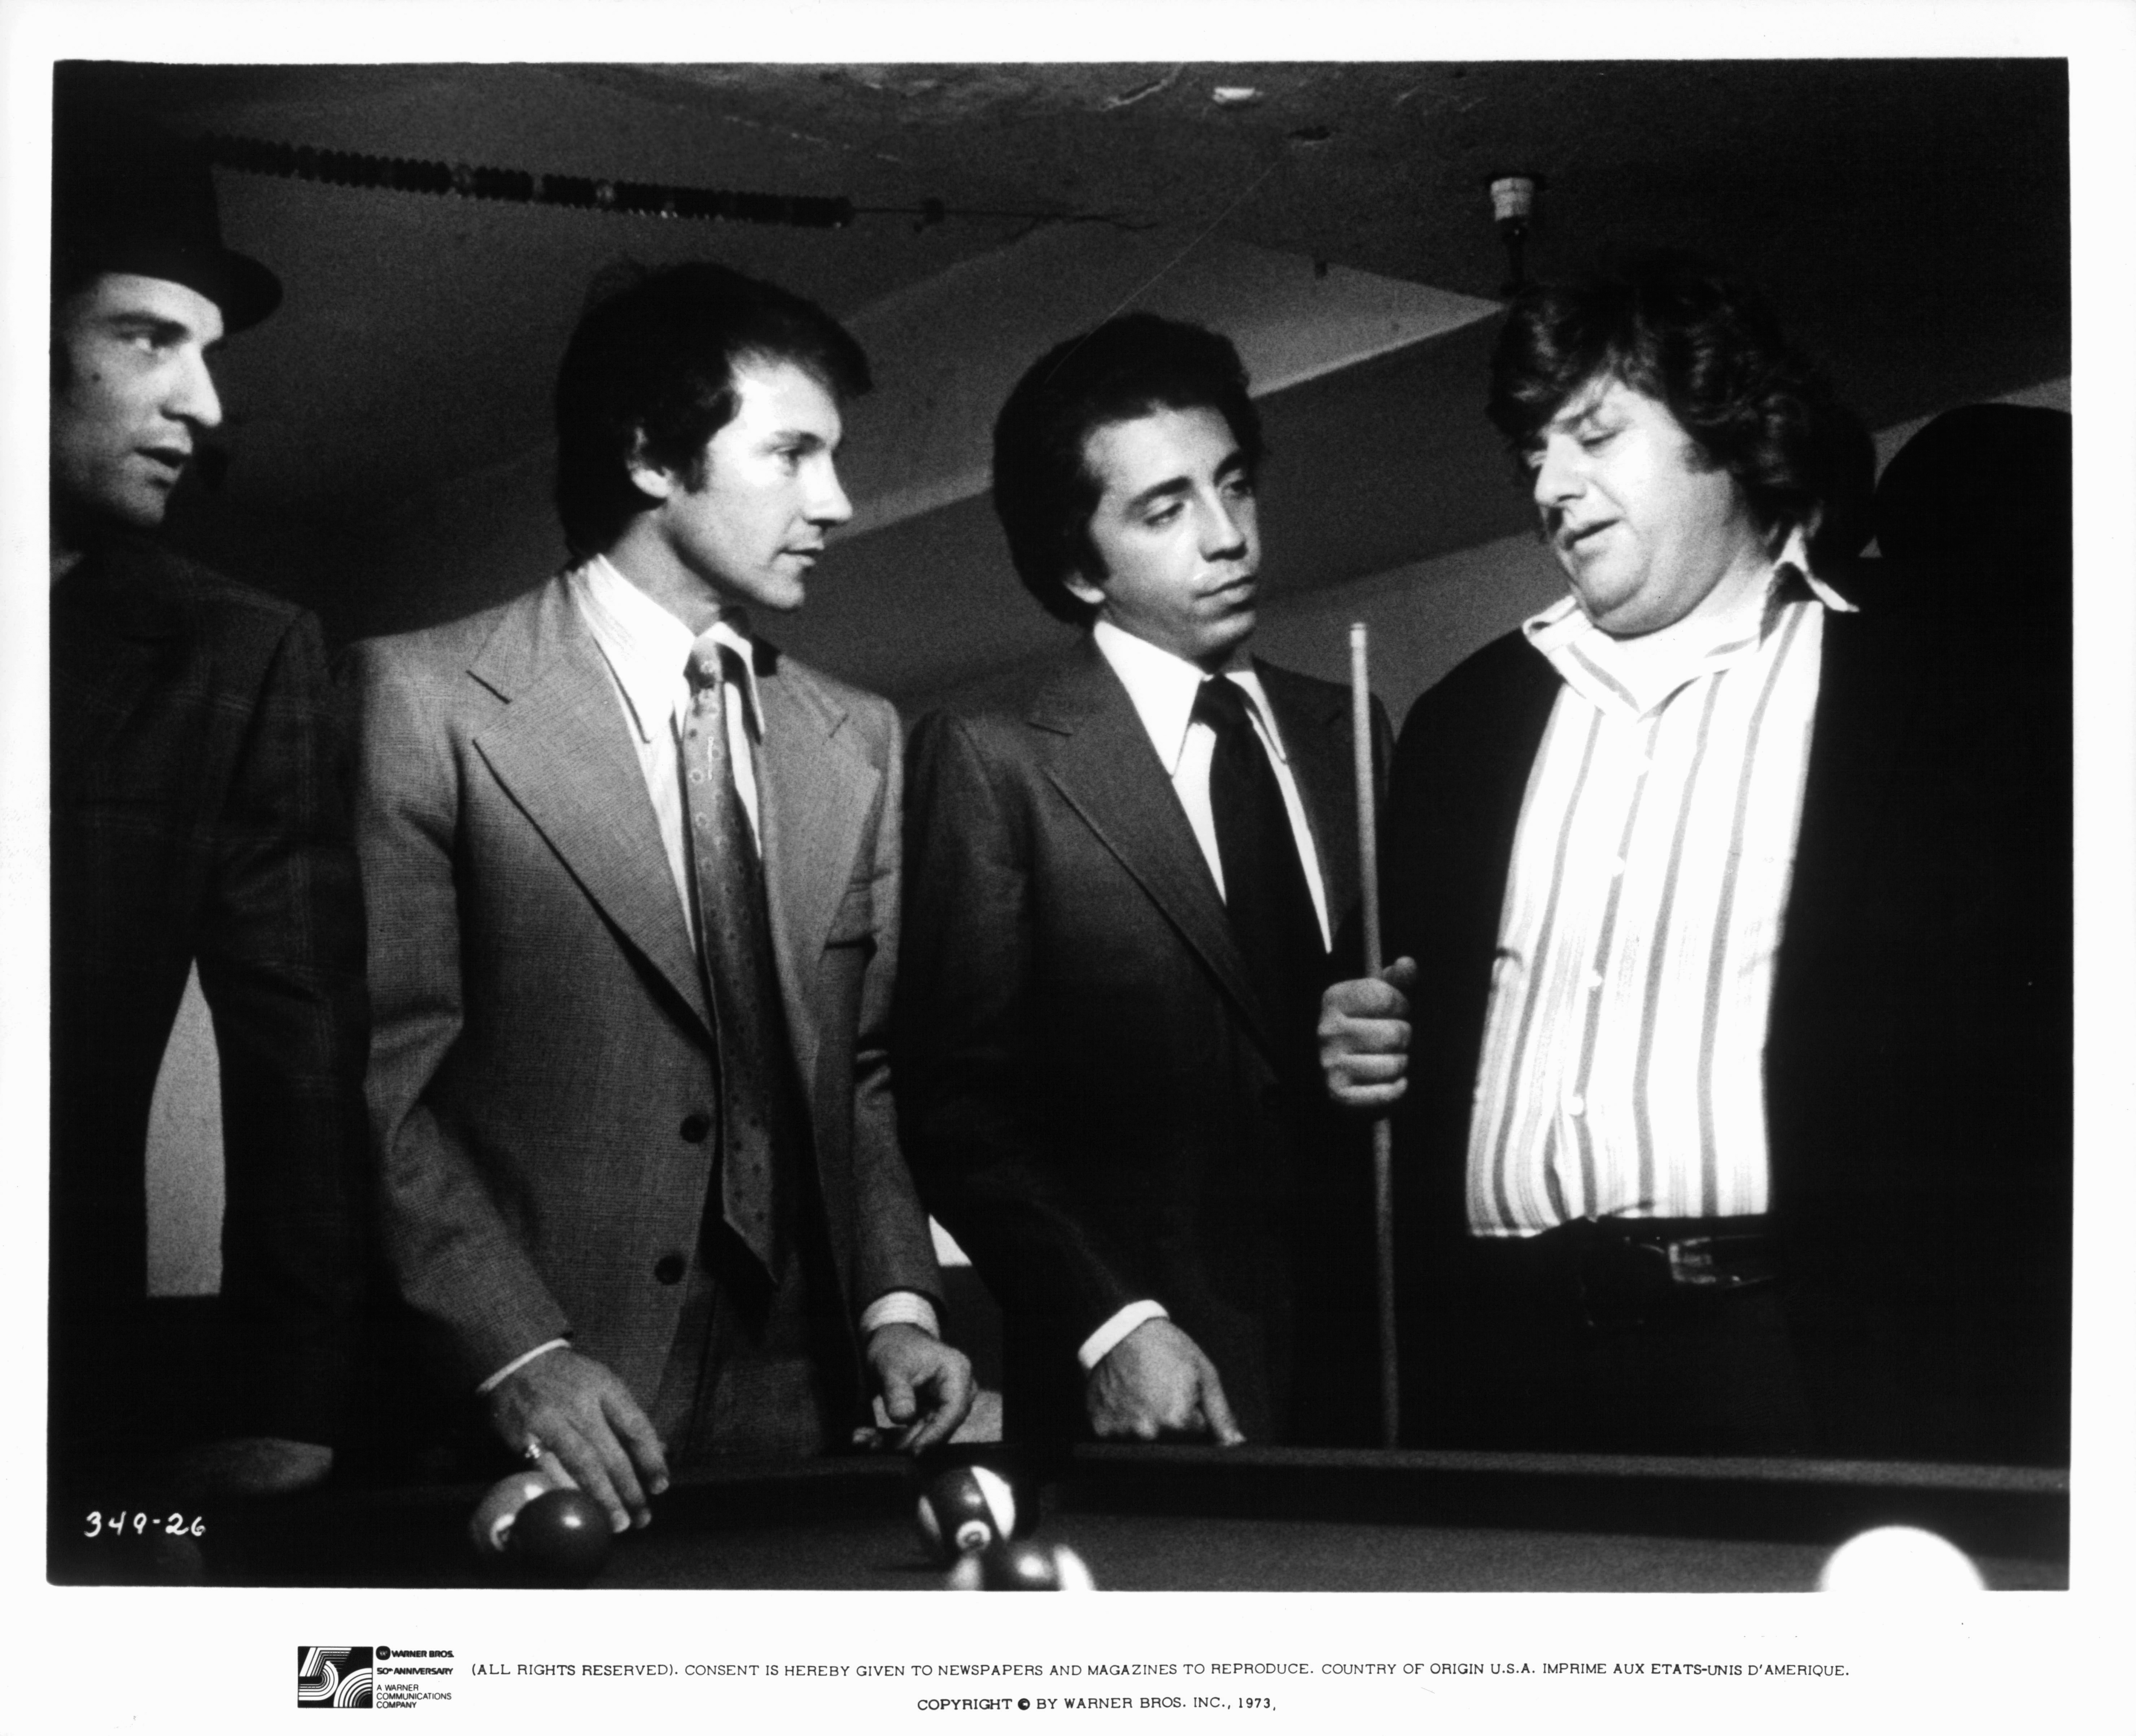 Still of Robert De Niro, Harvey Keitel and George Memmoli in Mean Streets (1973)